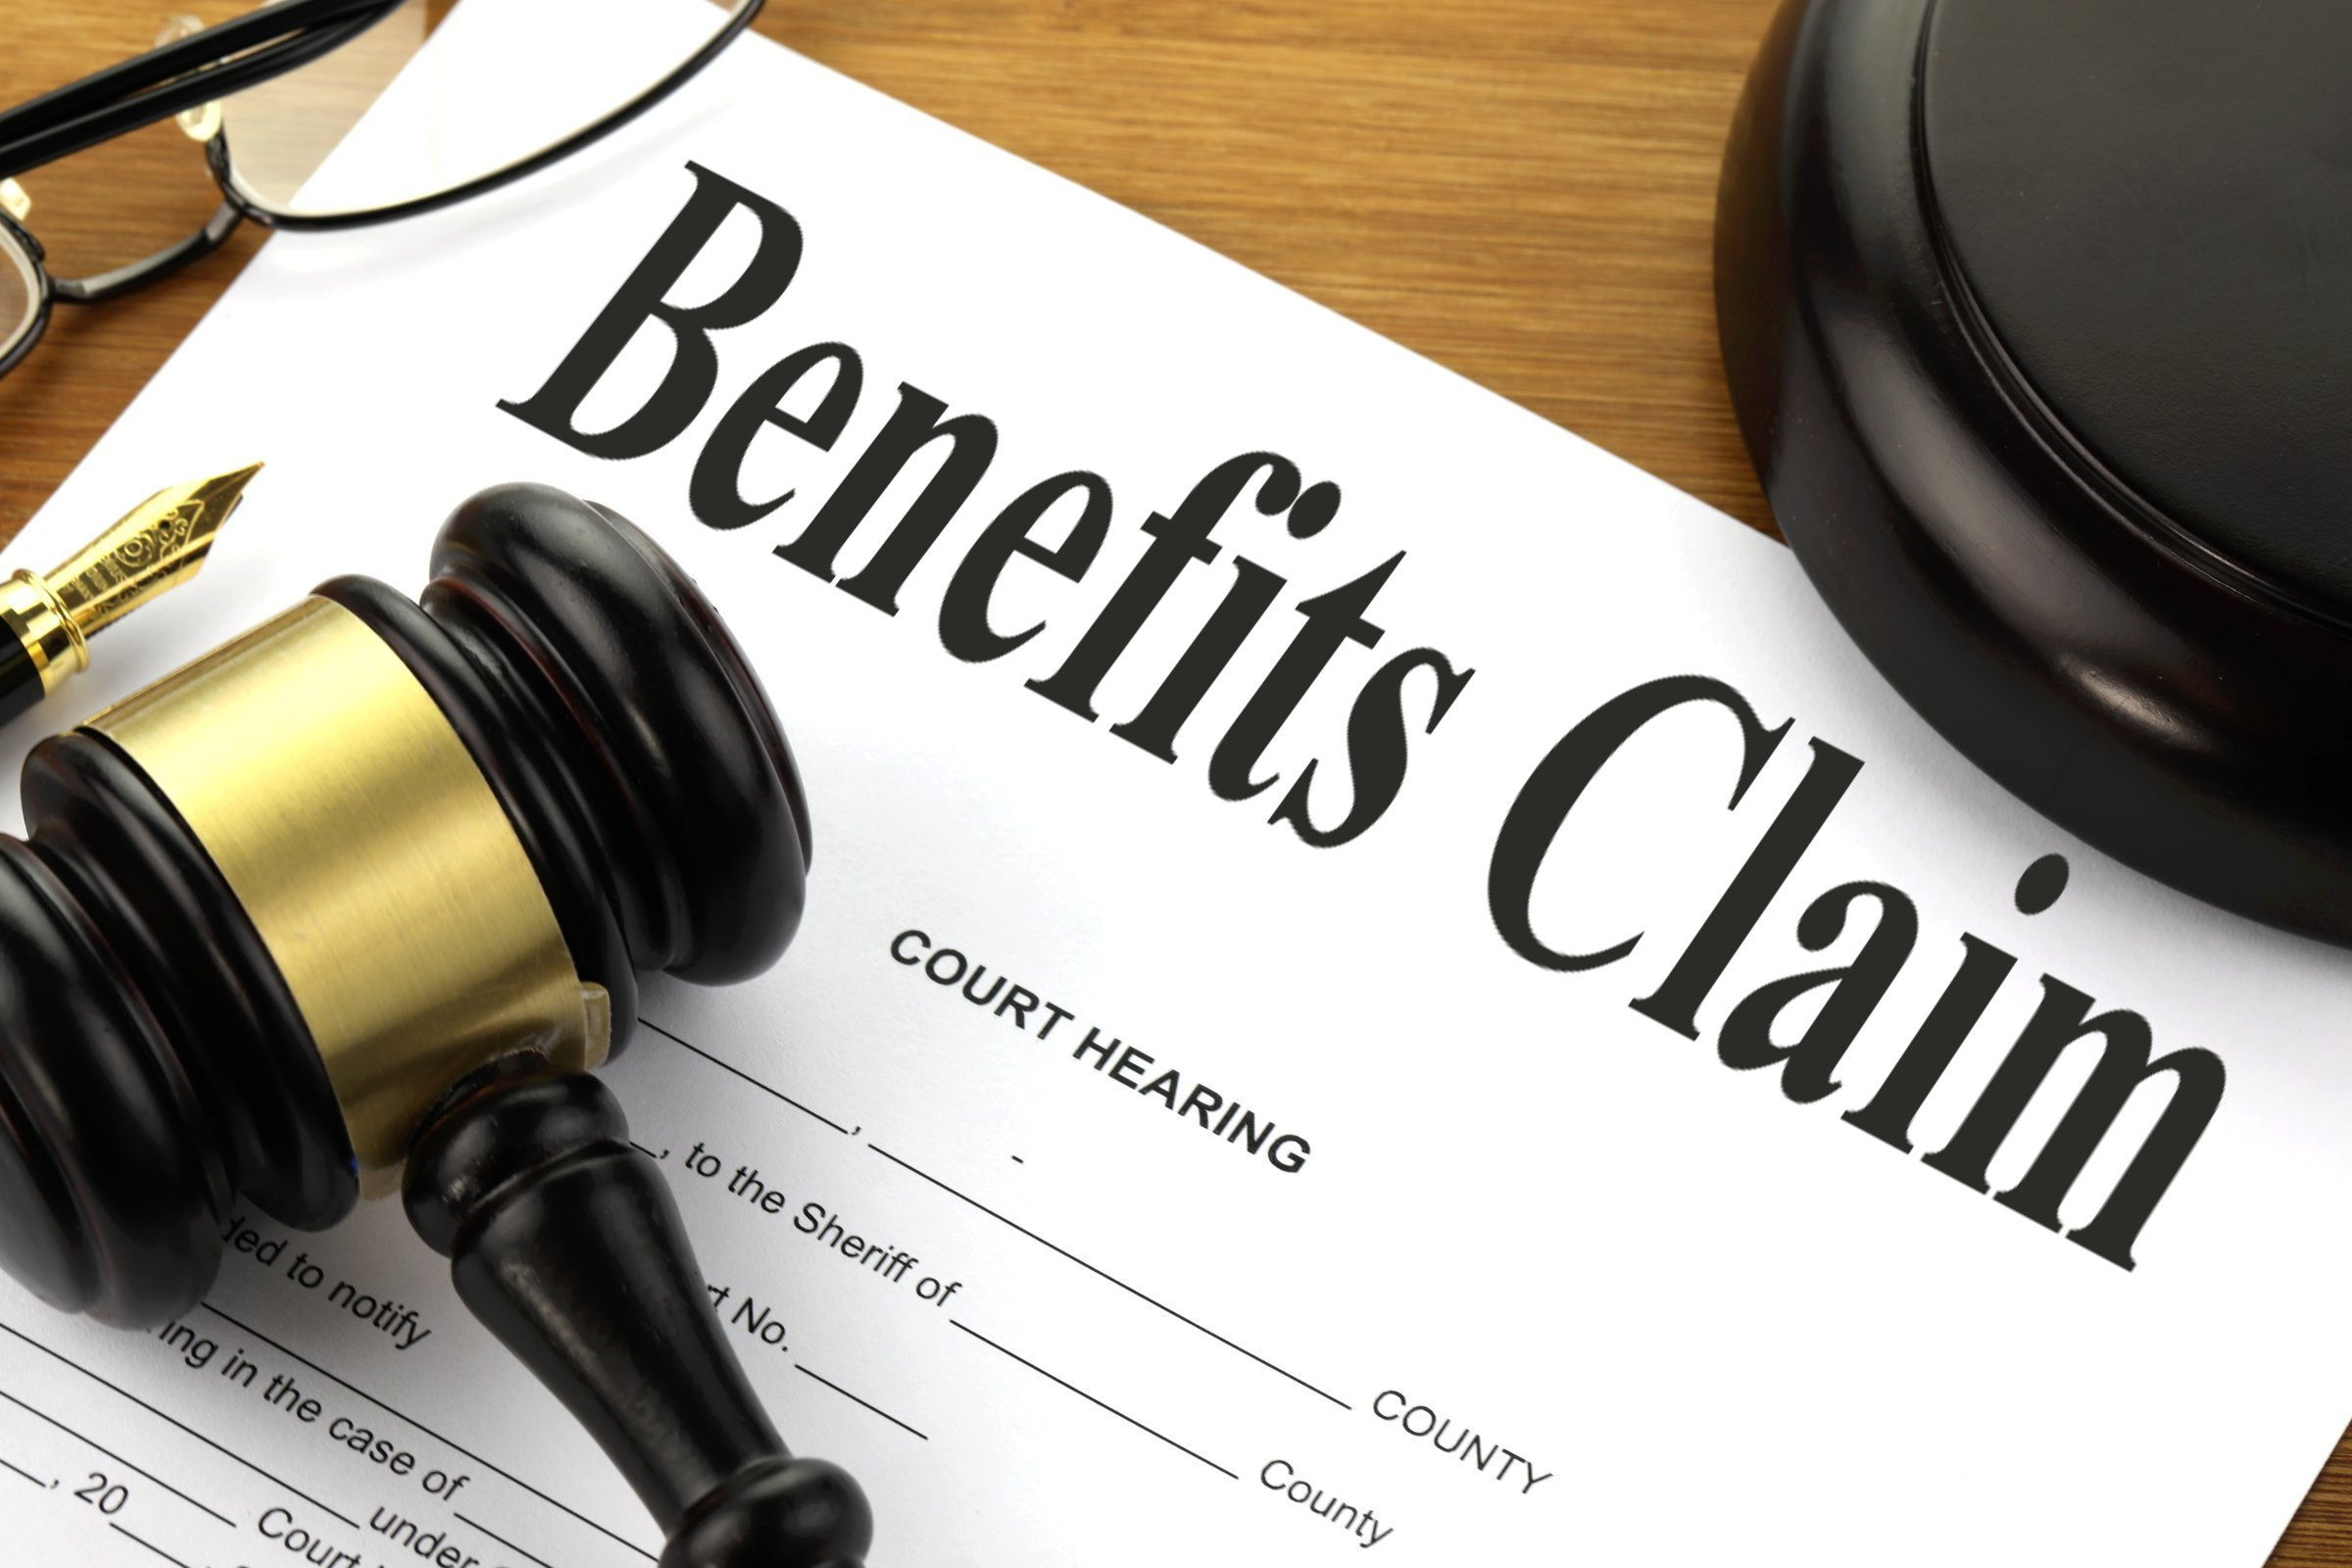 benefits claim